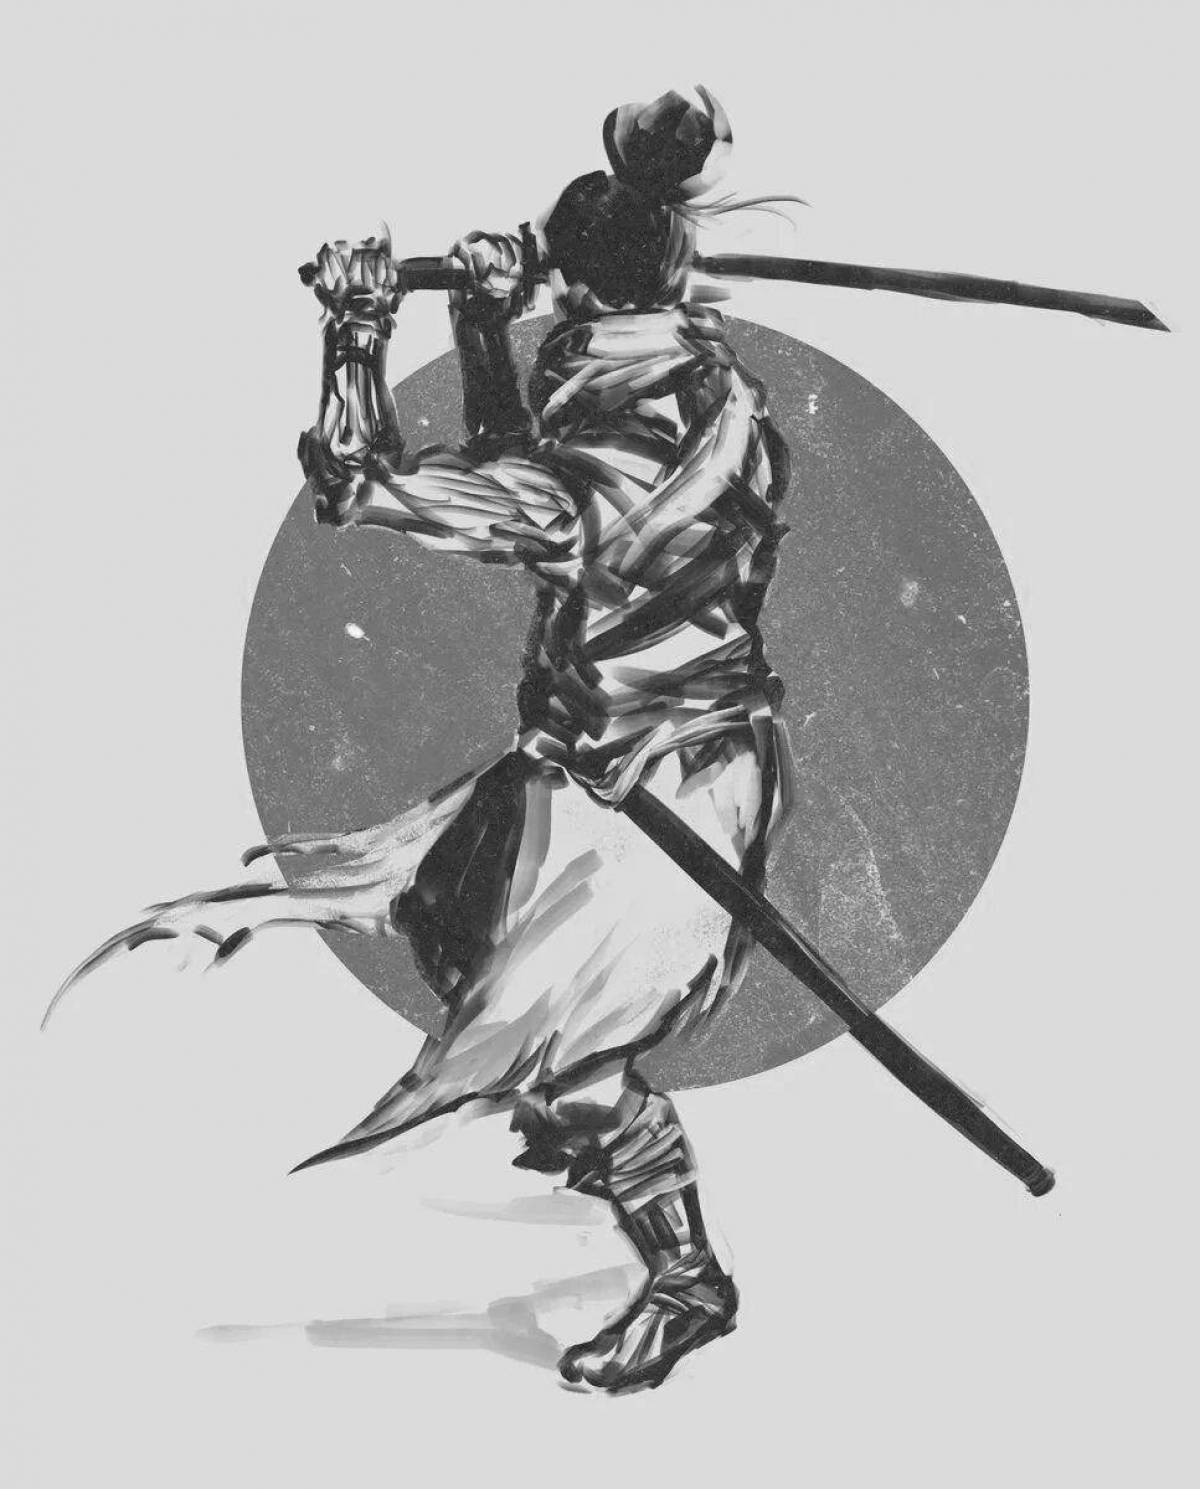 Great coloring of the shogun